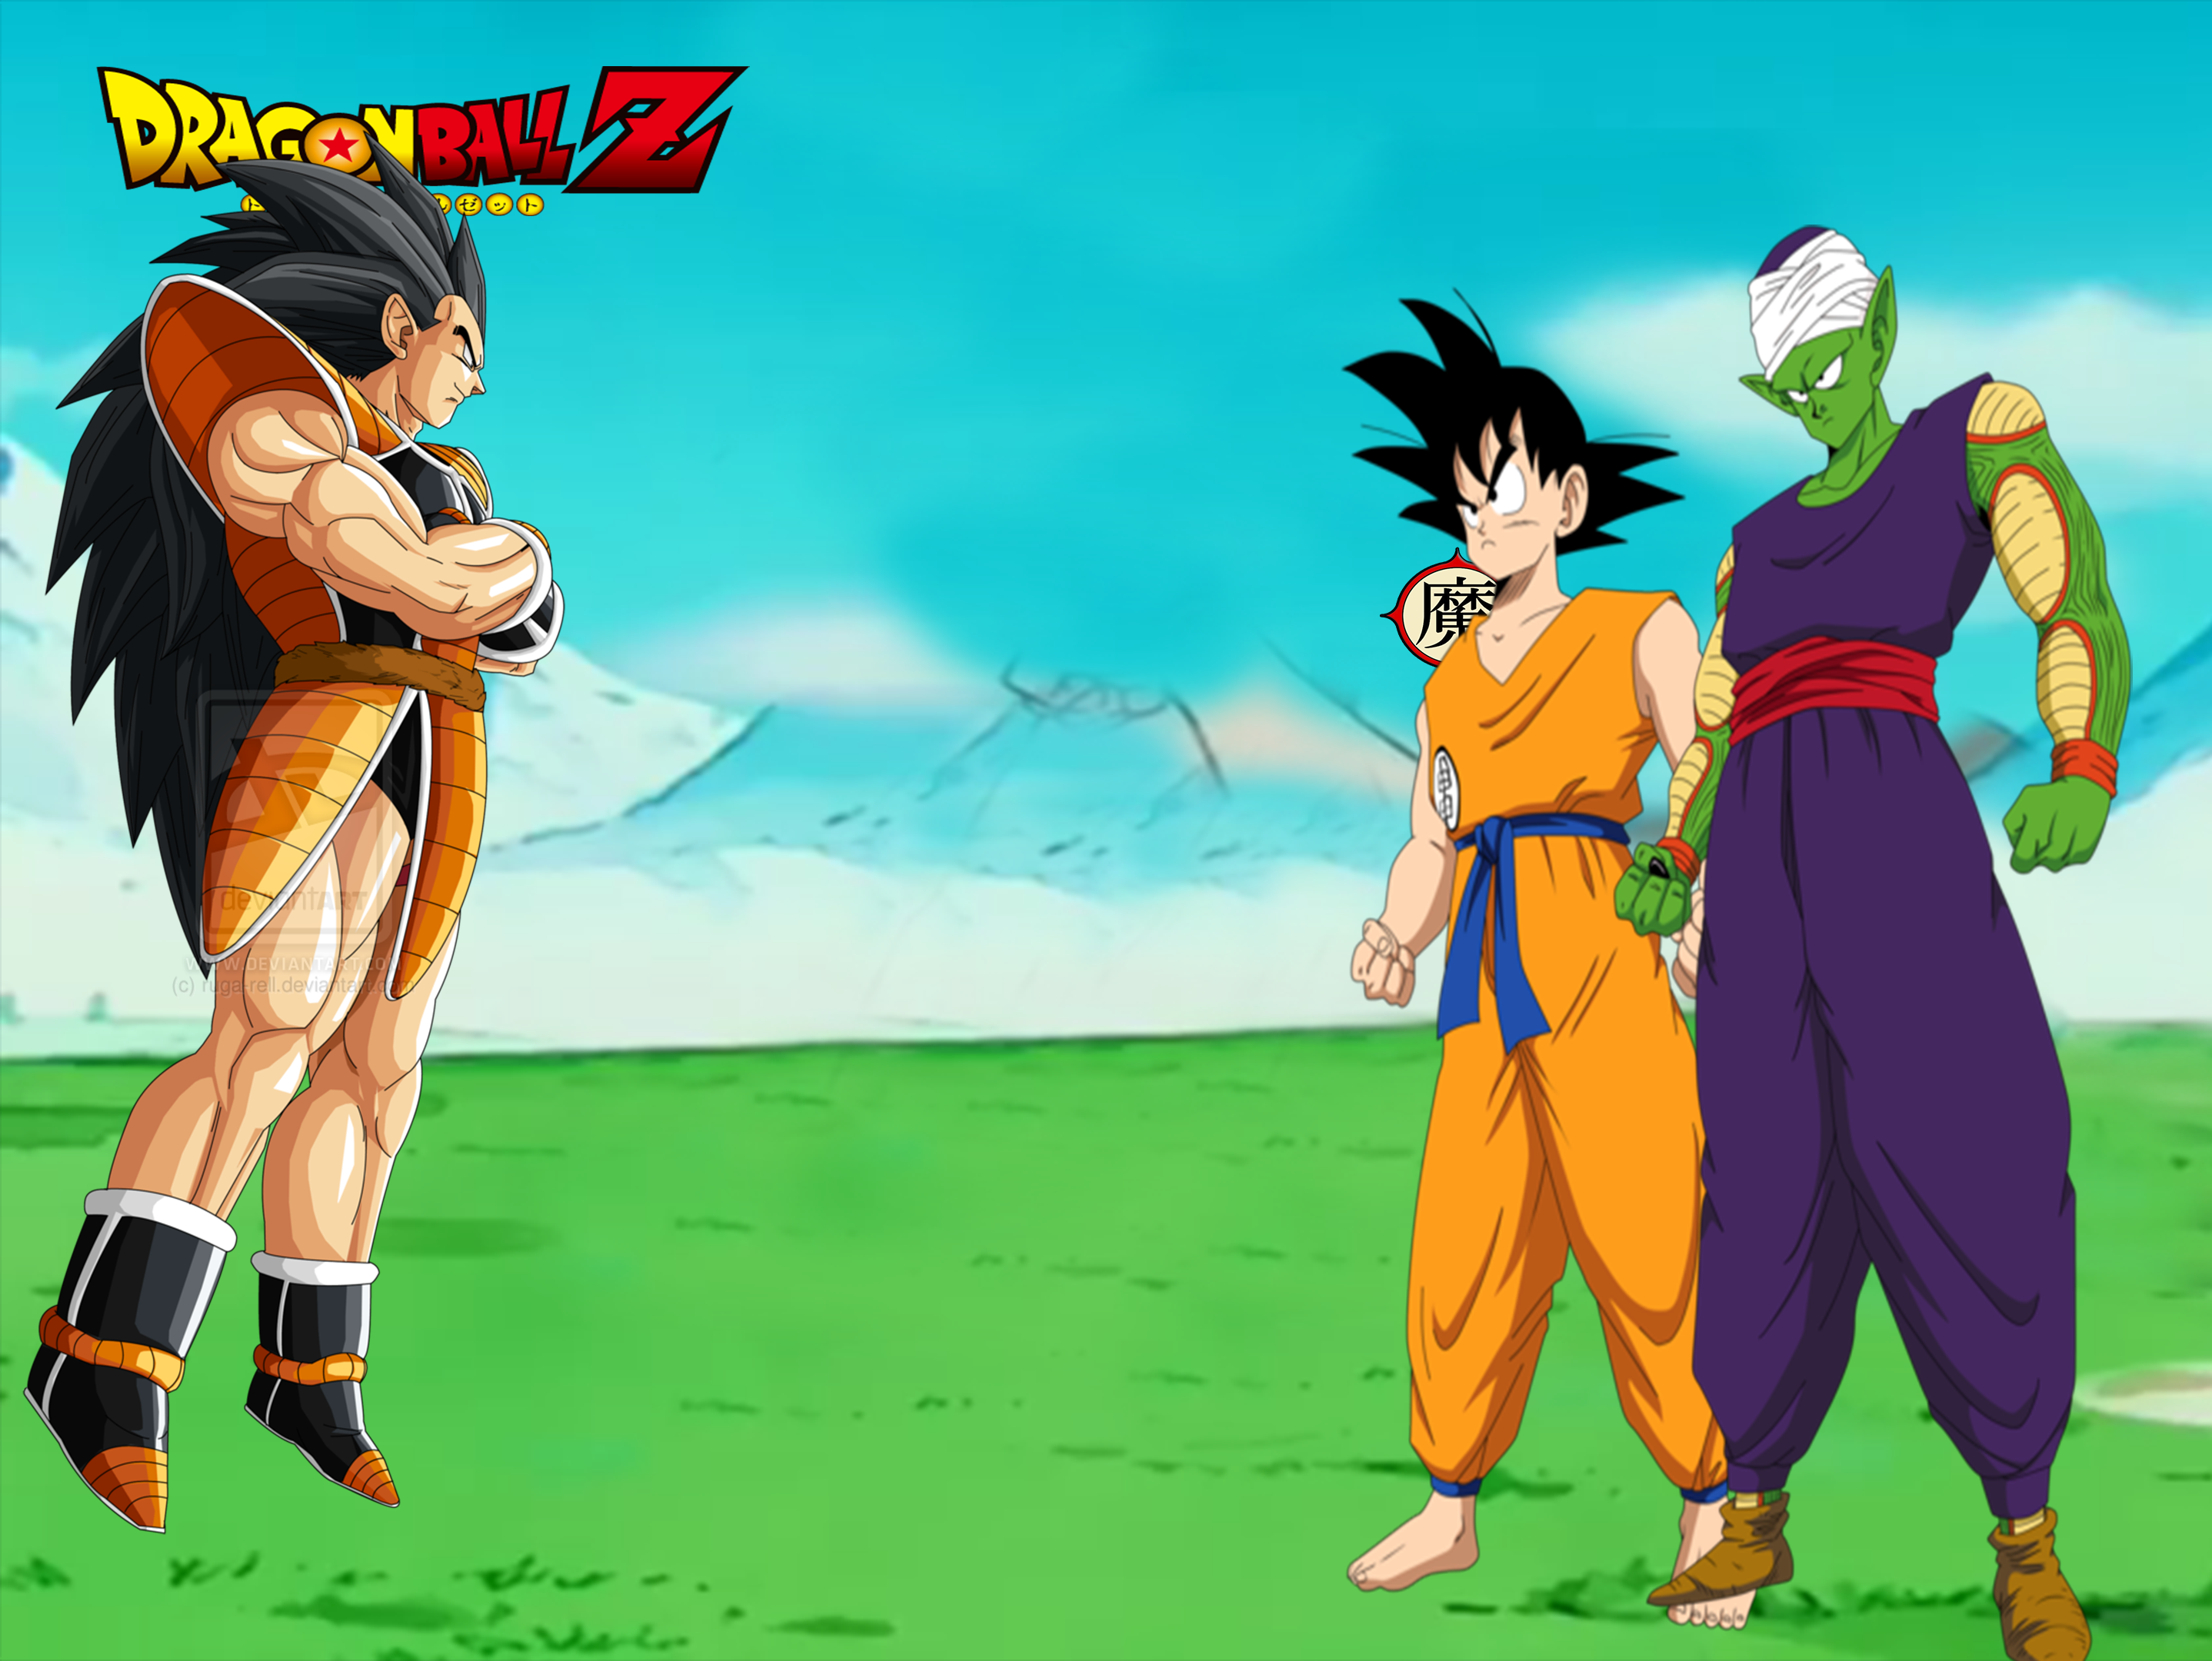 Dragon Ball Z Frsit Fight Goku e Piccolo vs Raditz by daimaoha5a4 on DeviantArt